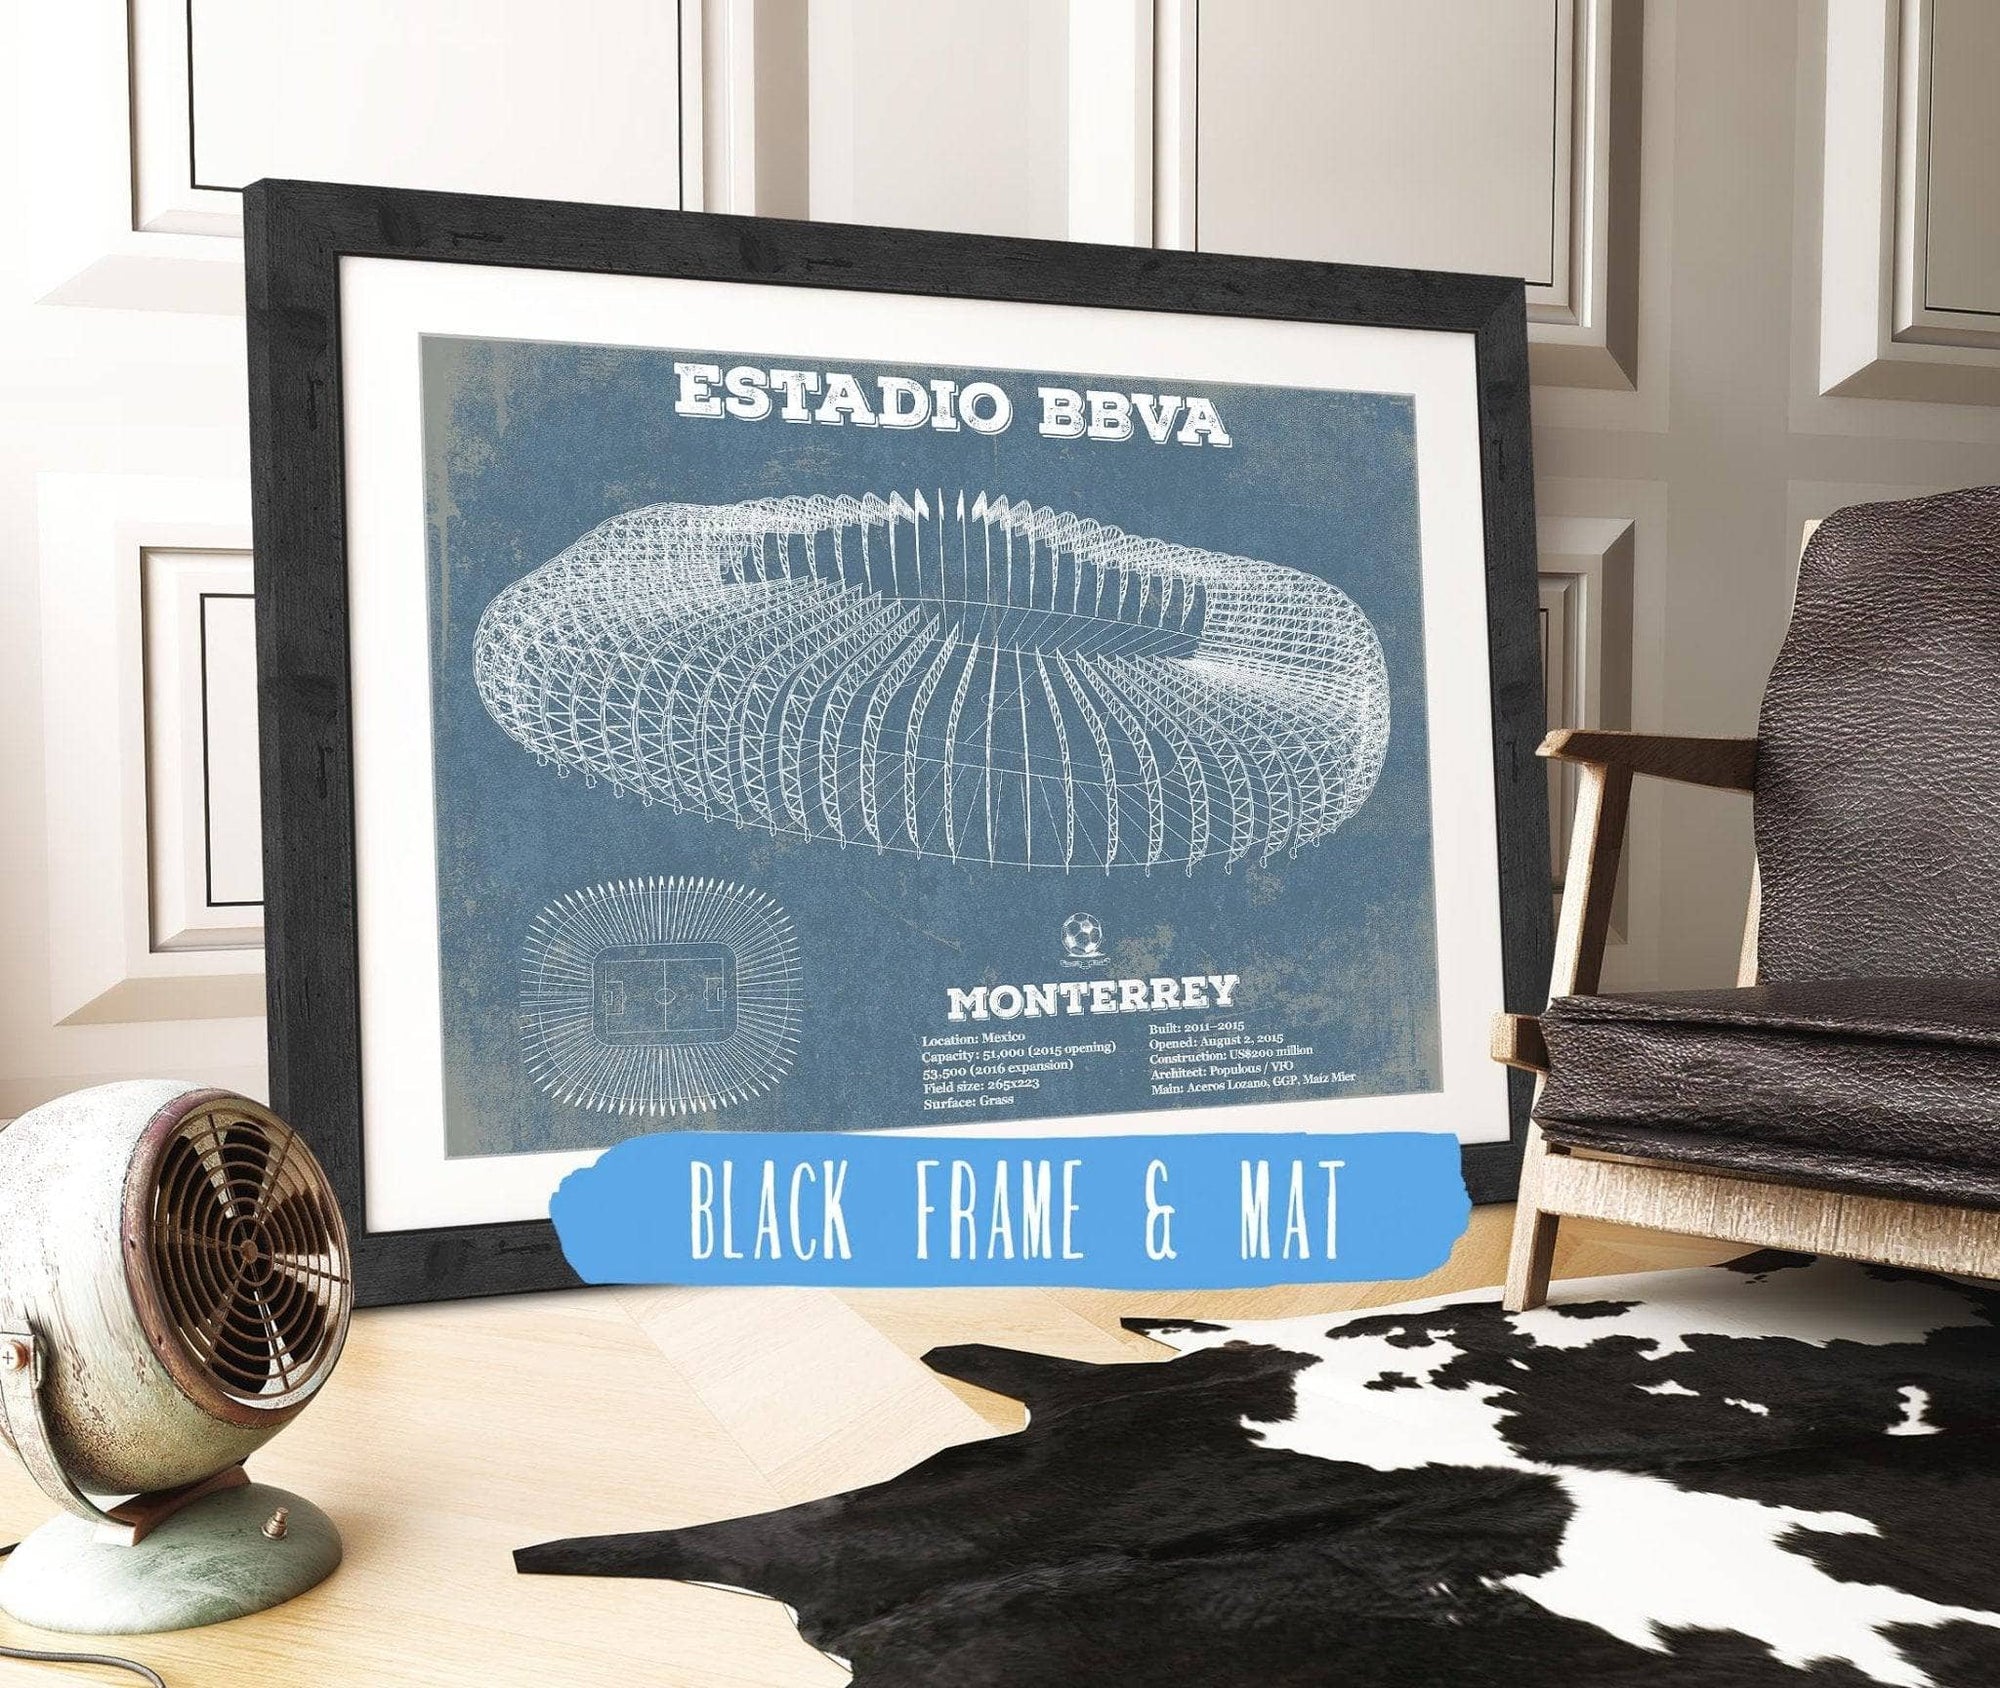 Cutler West Soccer Collection 14" x 11" / Black Frame & Mat Monterrey Vintage Estadio BBVA Soccer Print 833110141_57583